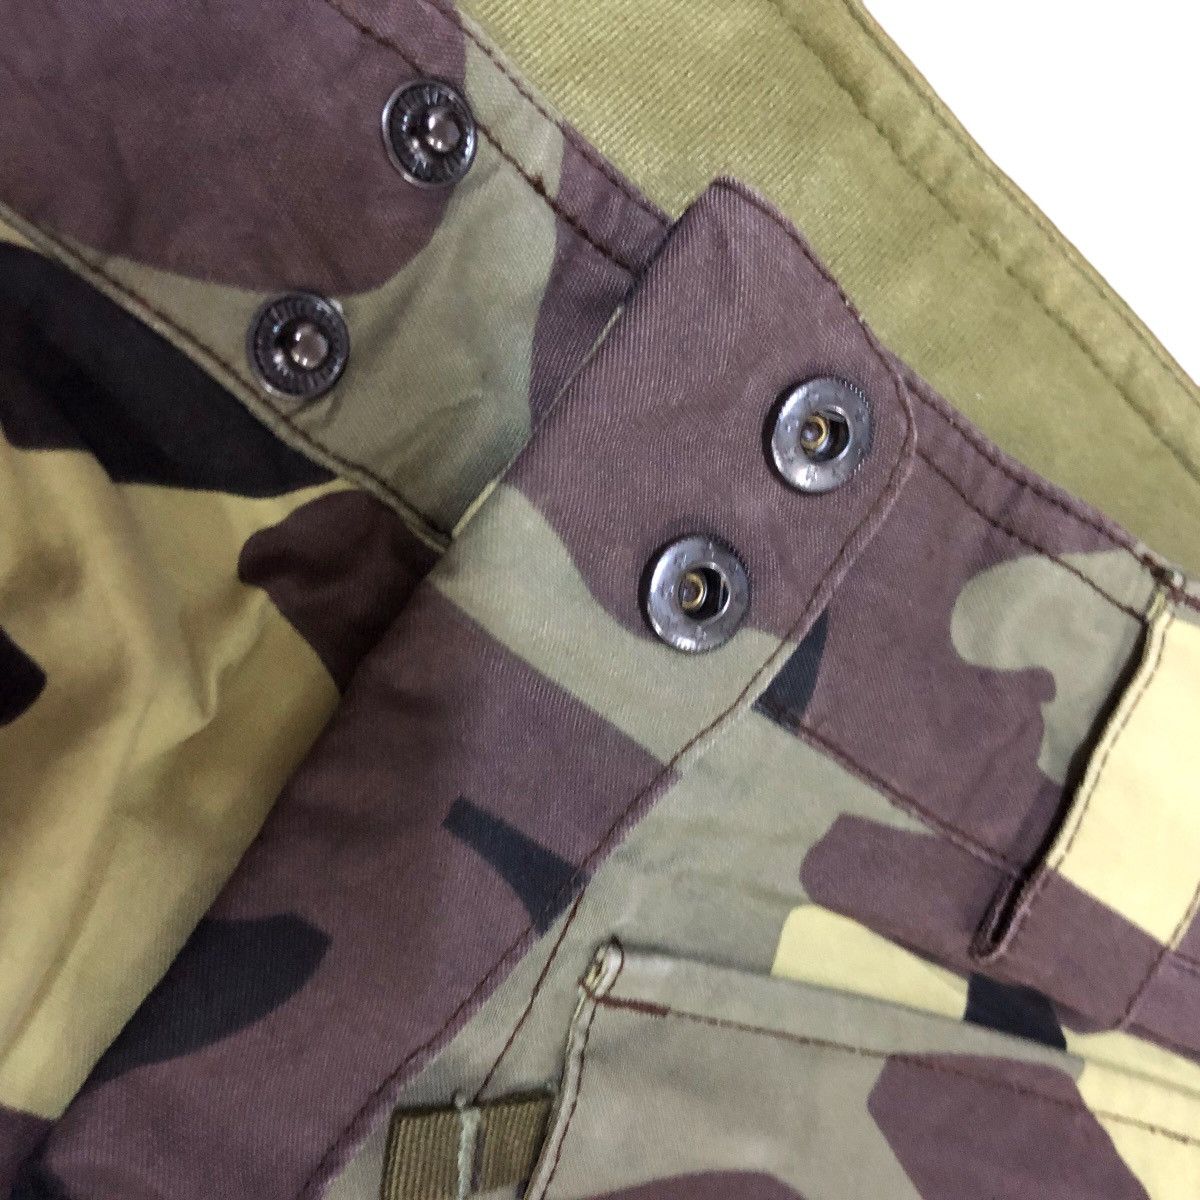 Ronin burton dryride outerwear camouflage snowboard pants - 4